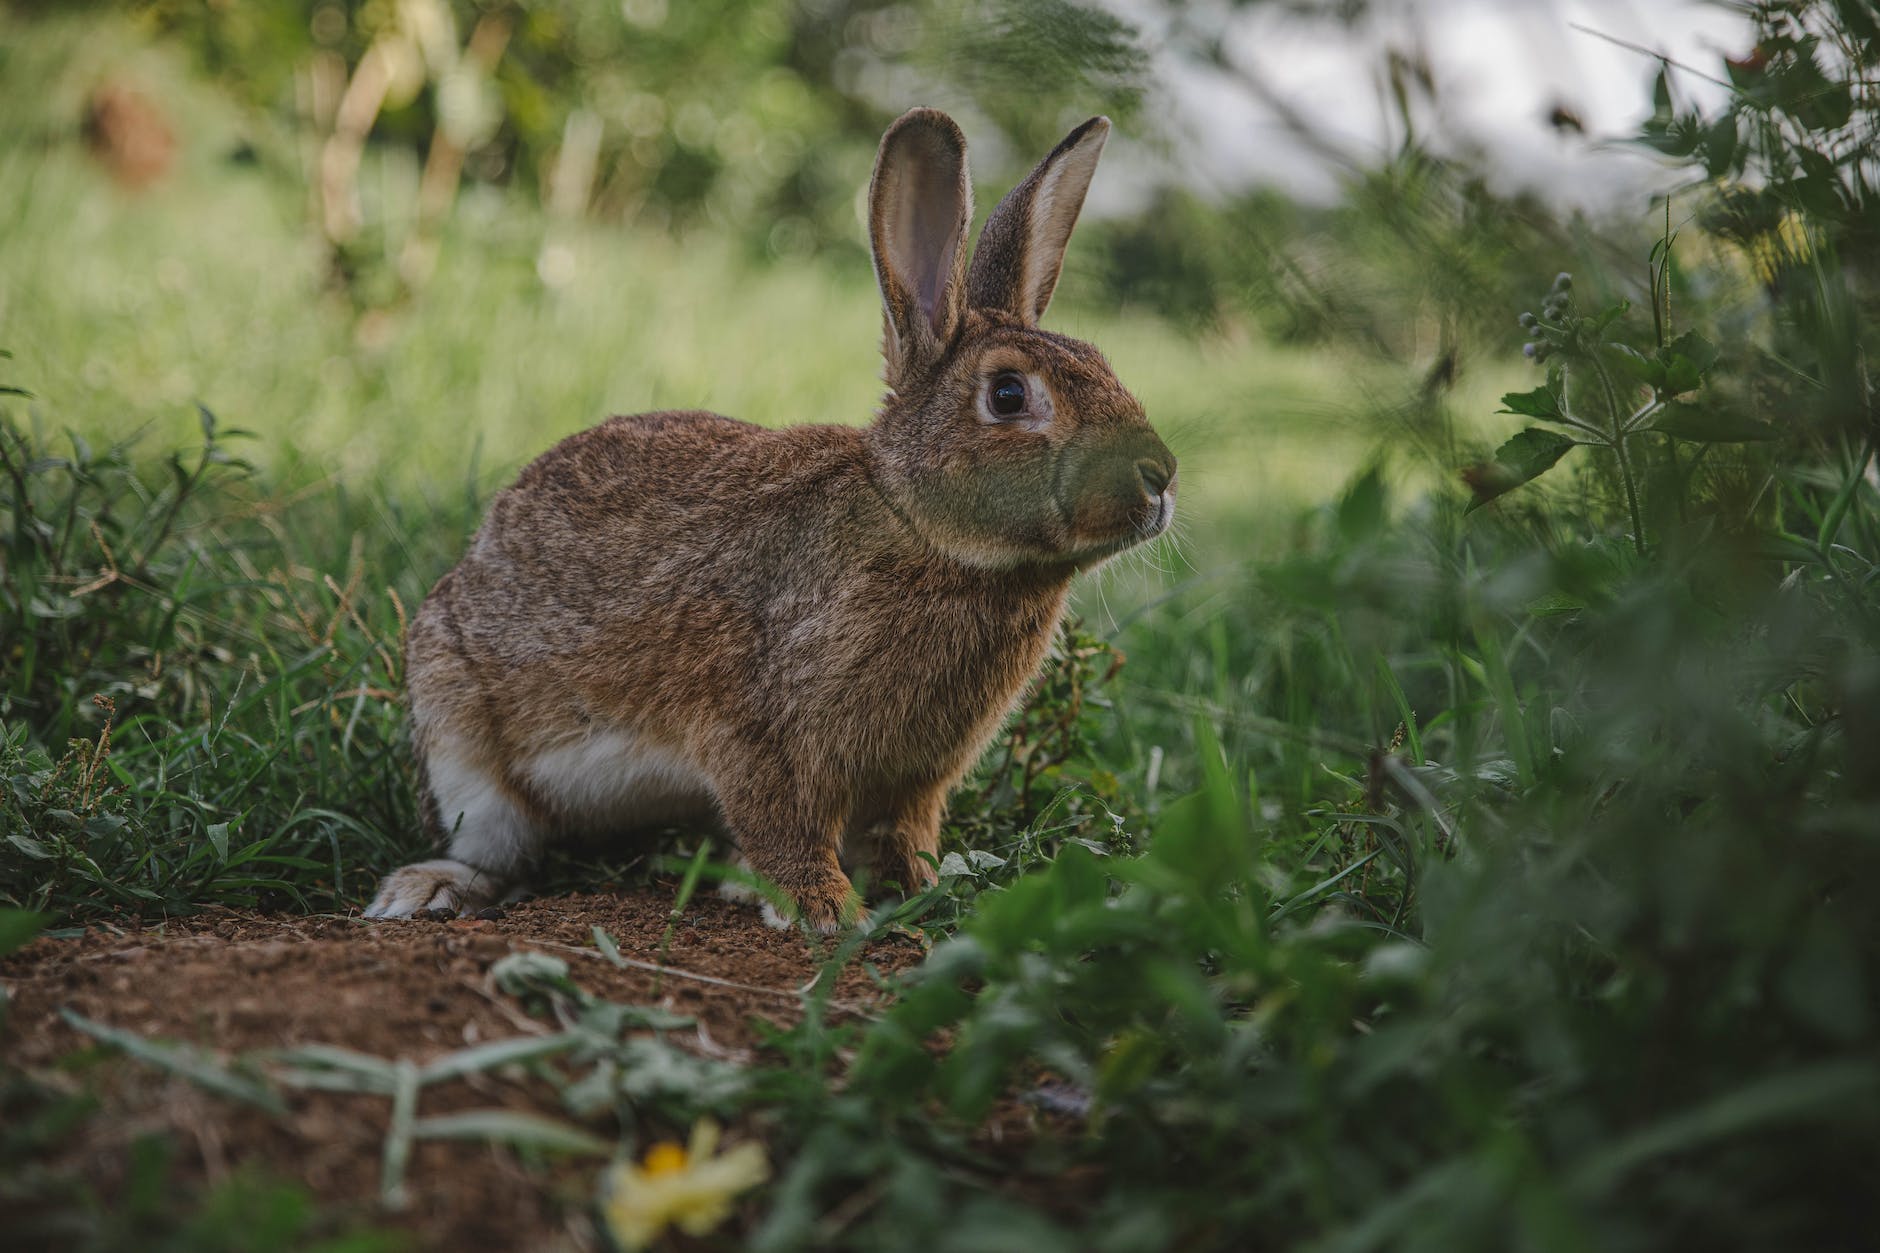 a close up shot of a brown rabbit